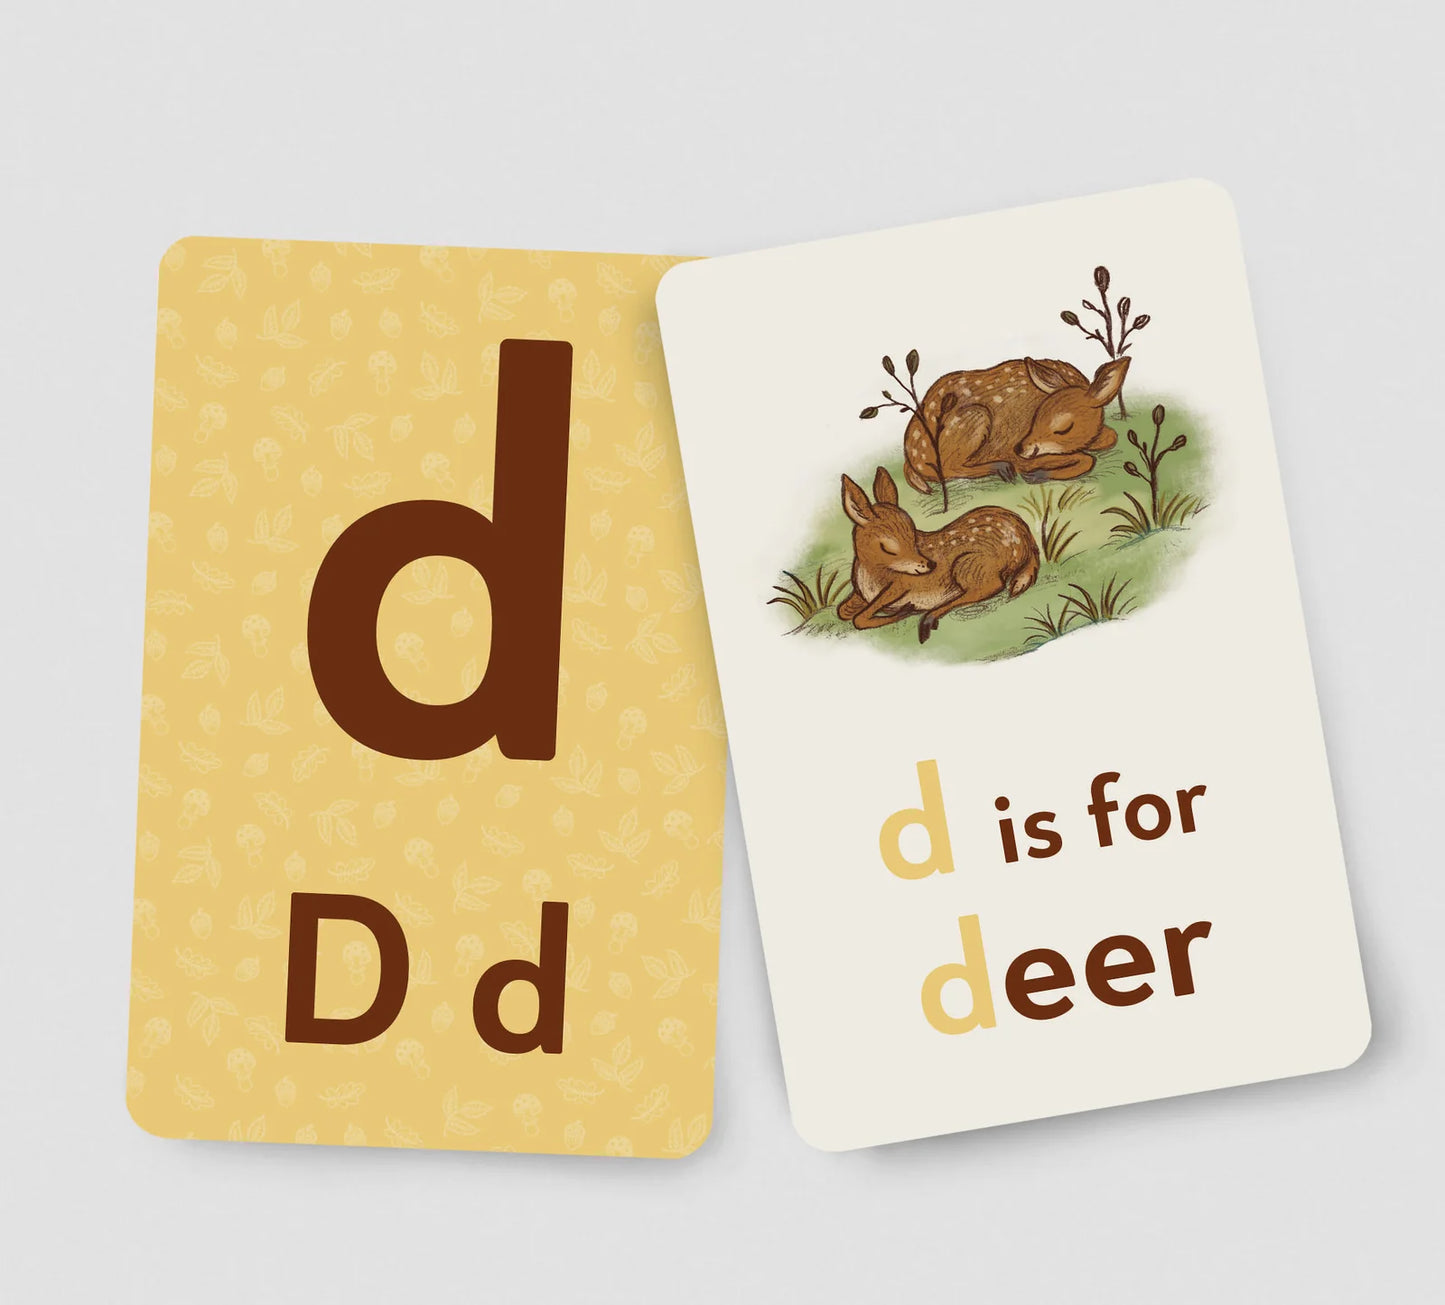 Brown Bear Wood - Let's Learn Our ABC - 26 Alphabet Flashcards